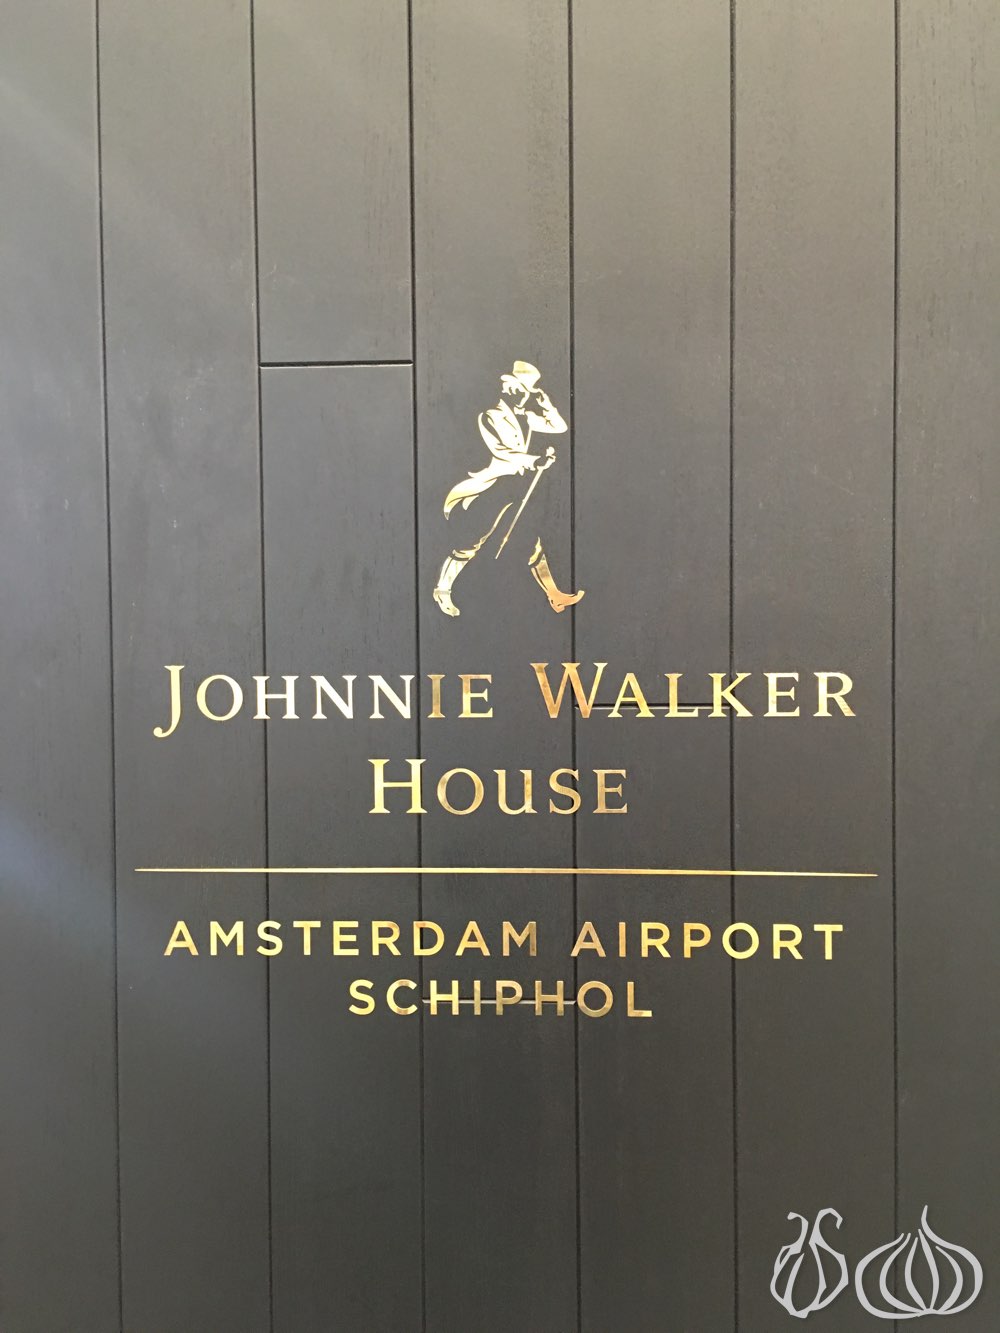 Johnnie Walker: Amsterdam's Standalone Experience